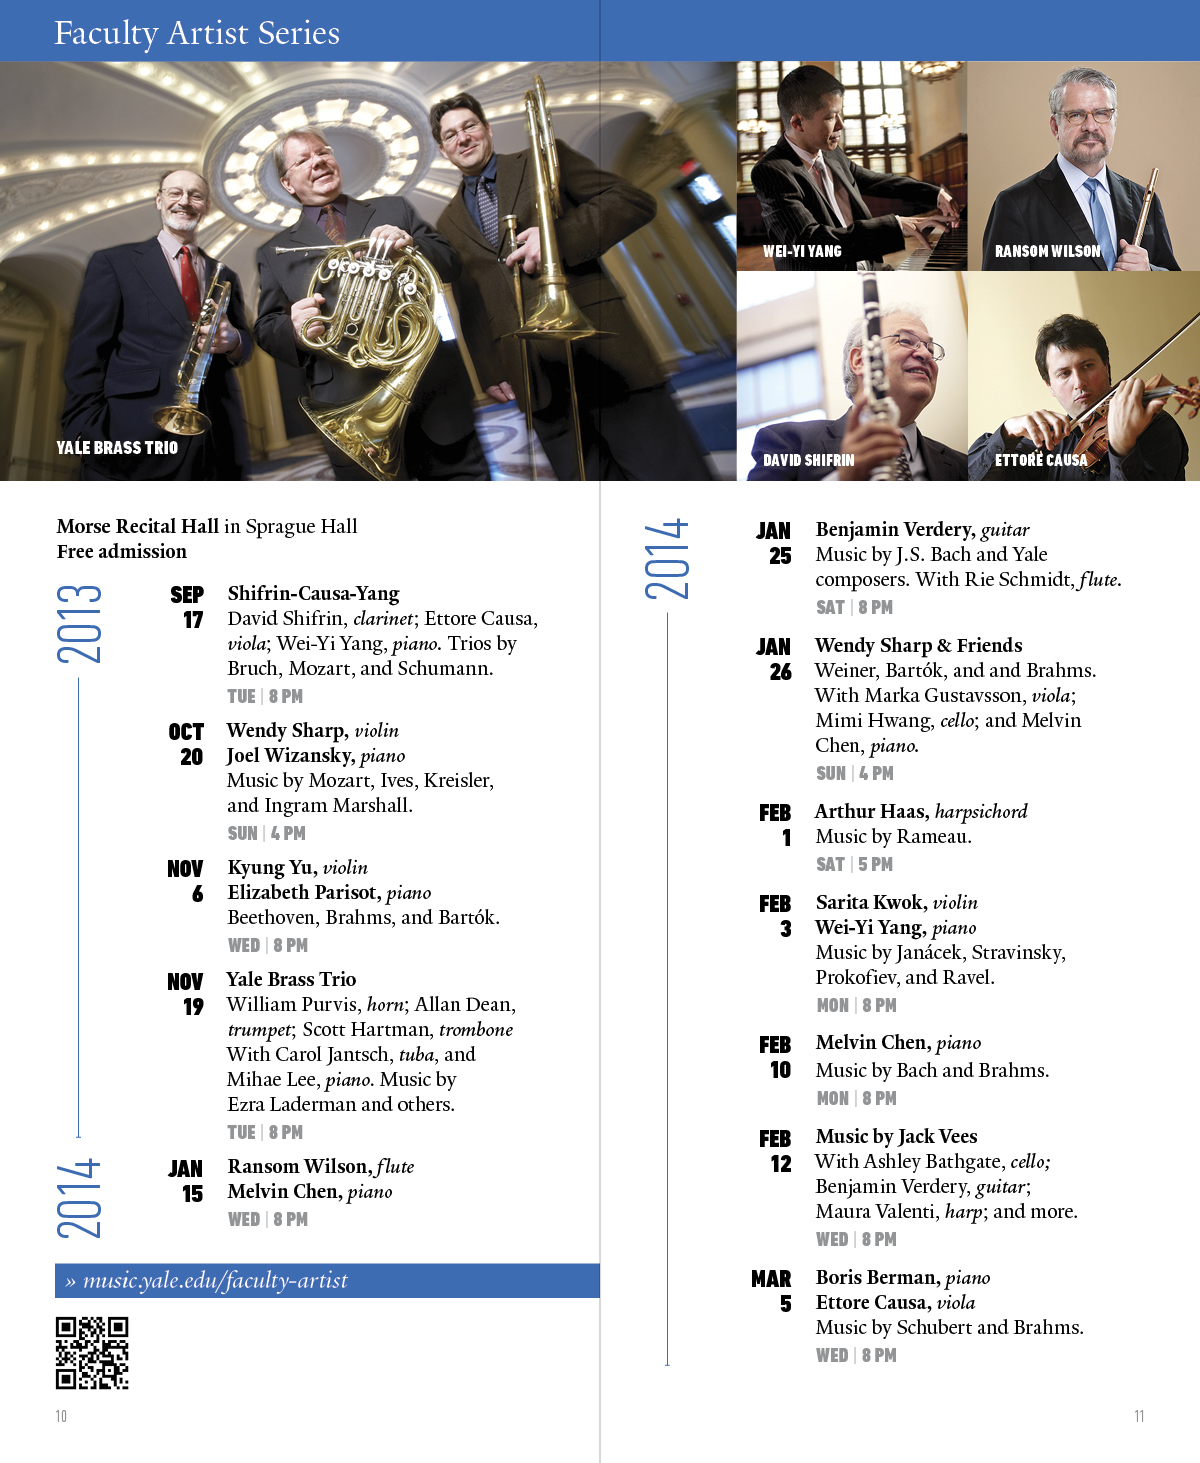 Music at Yale University Season Program / Schedule /Calendar by Granite Bay Graphic Design